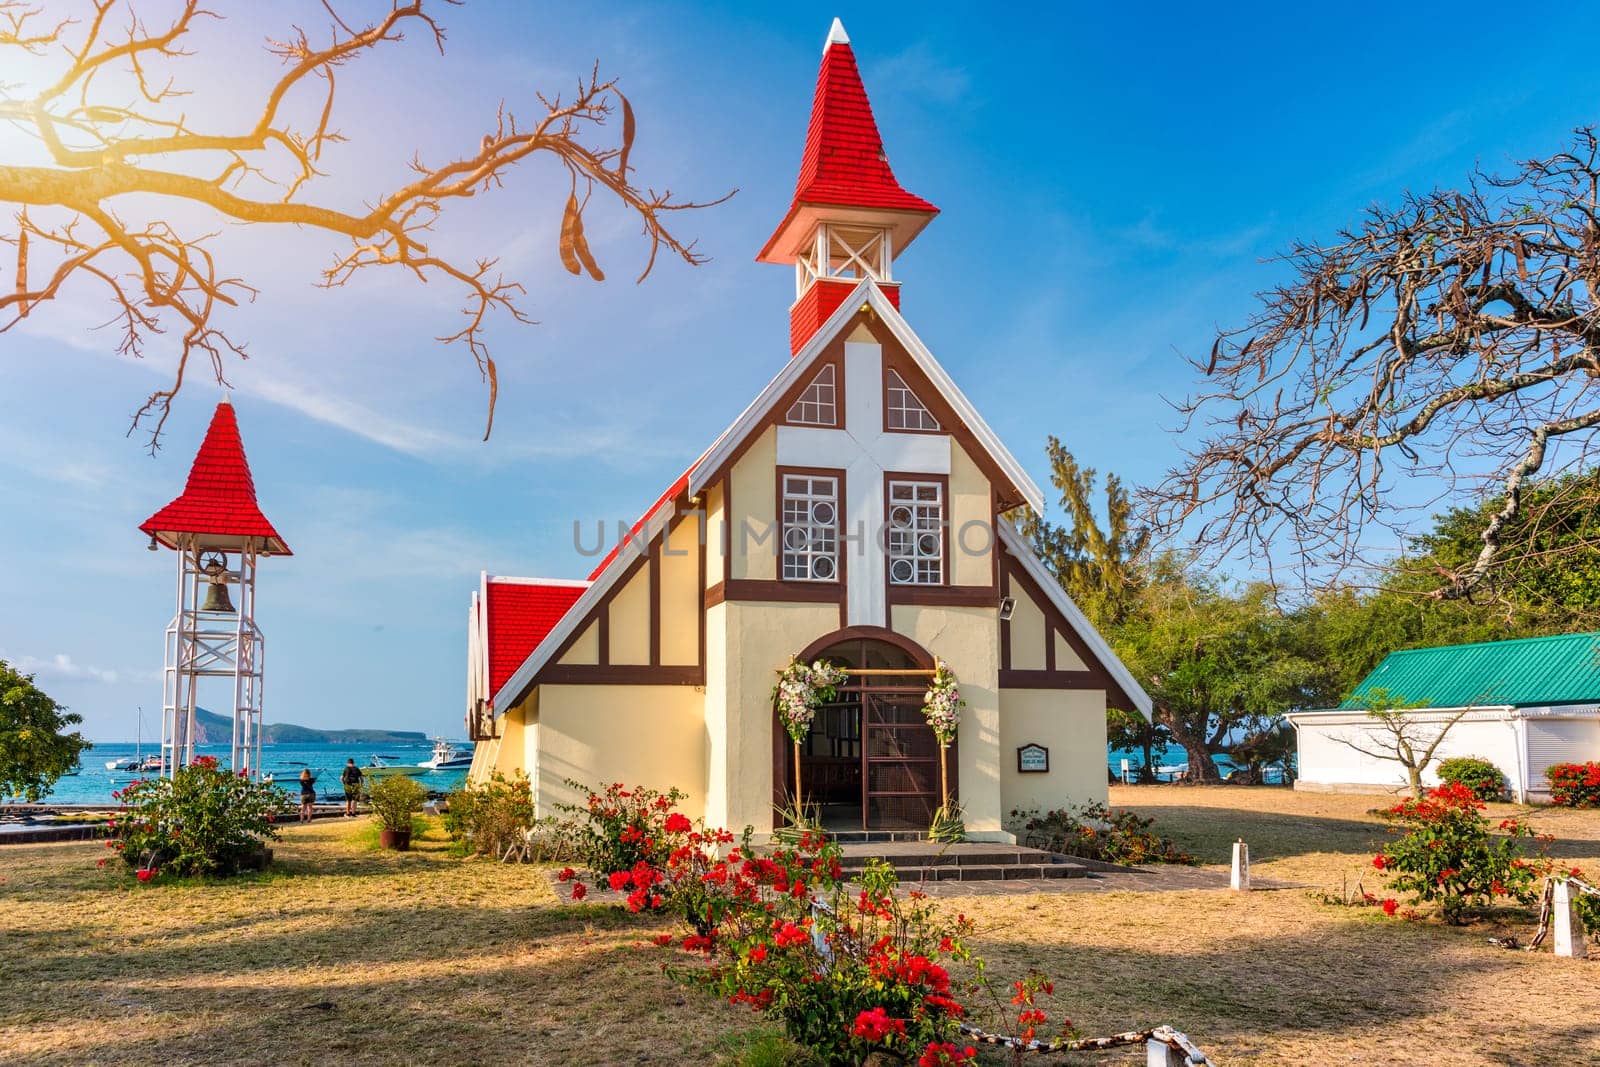 Red church at Cap Malheureux village, Mauritius Island. Notre Dame de Auxiliatrice, rural church with red roof in Cap Malheureux tropical village on Mauritius island, Indian Ocean.